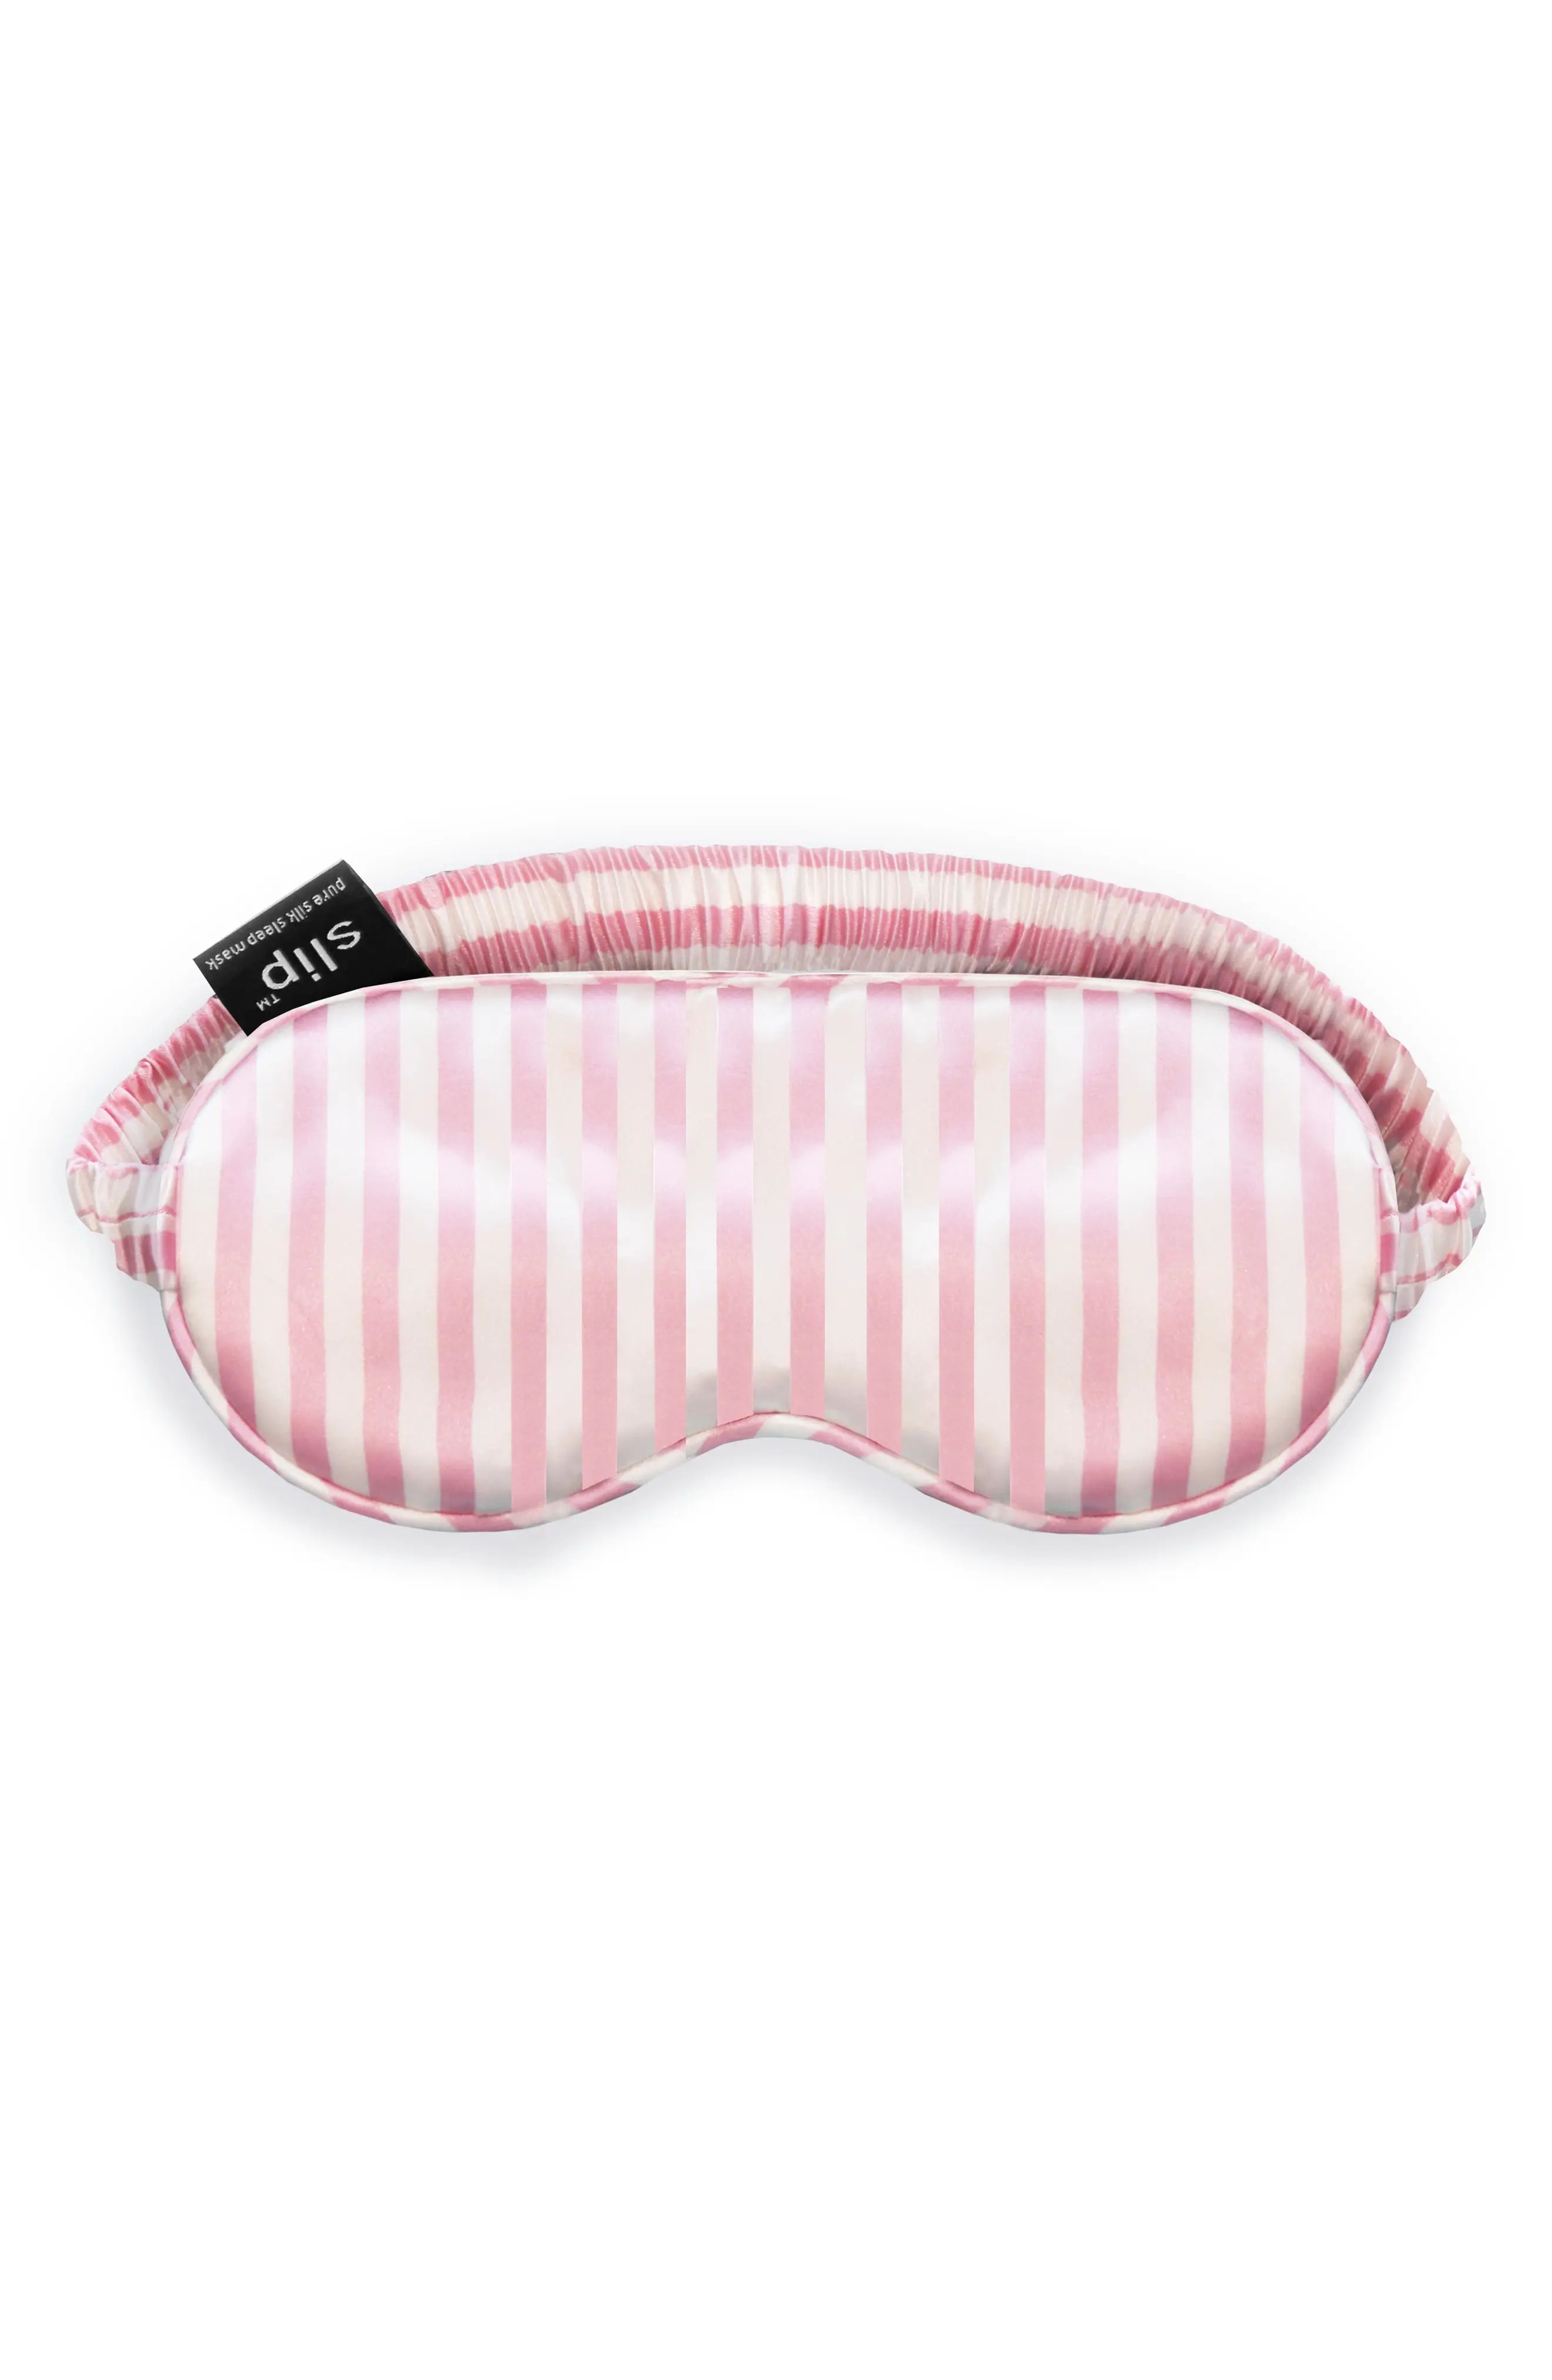 SLIP FOR BEAUTY SLEEP Silk Sleep Mask - Pink Stripe at Nordstrom Rack | Nordstrom Rack